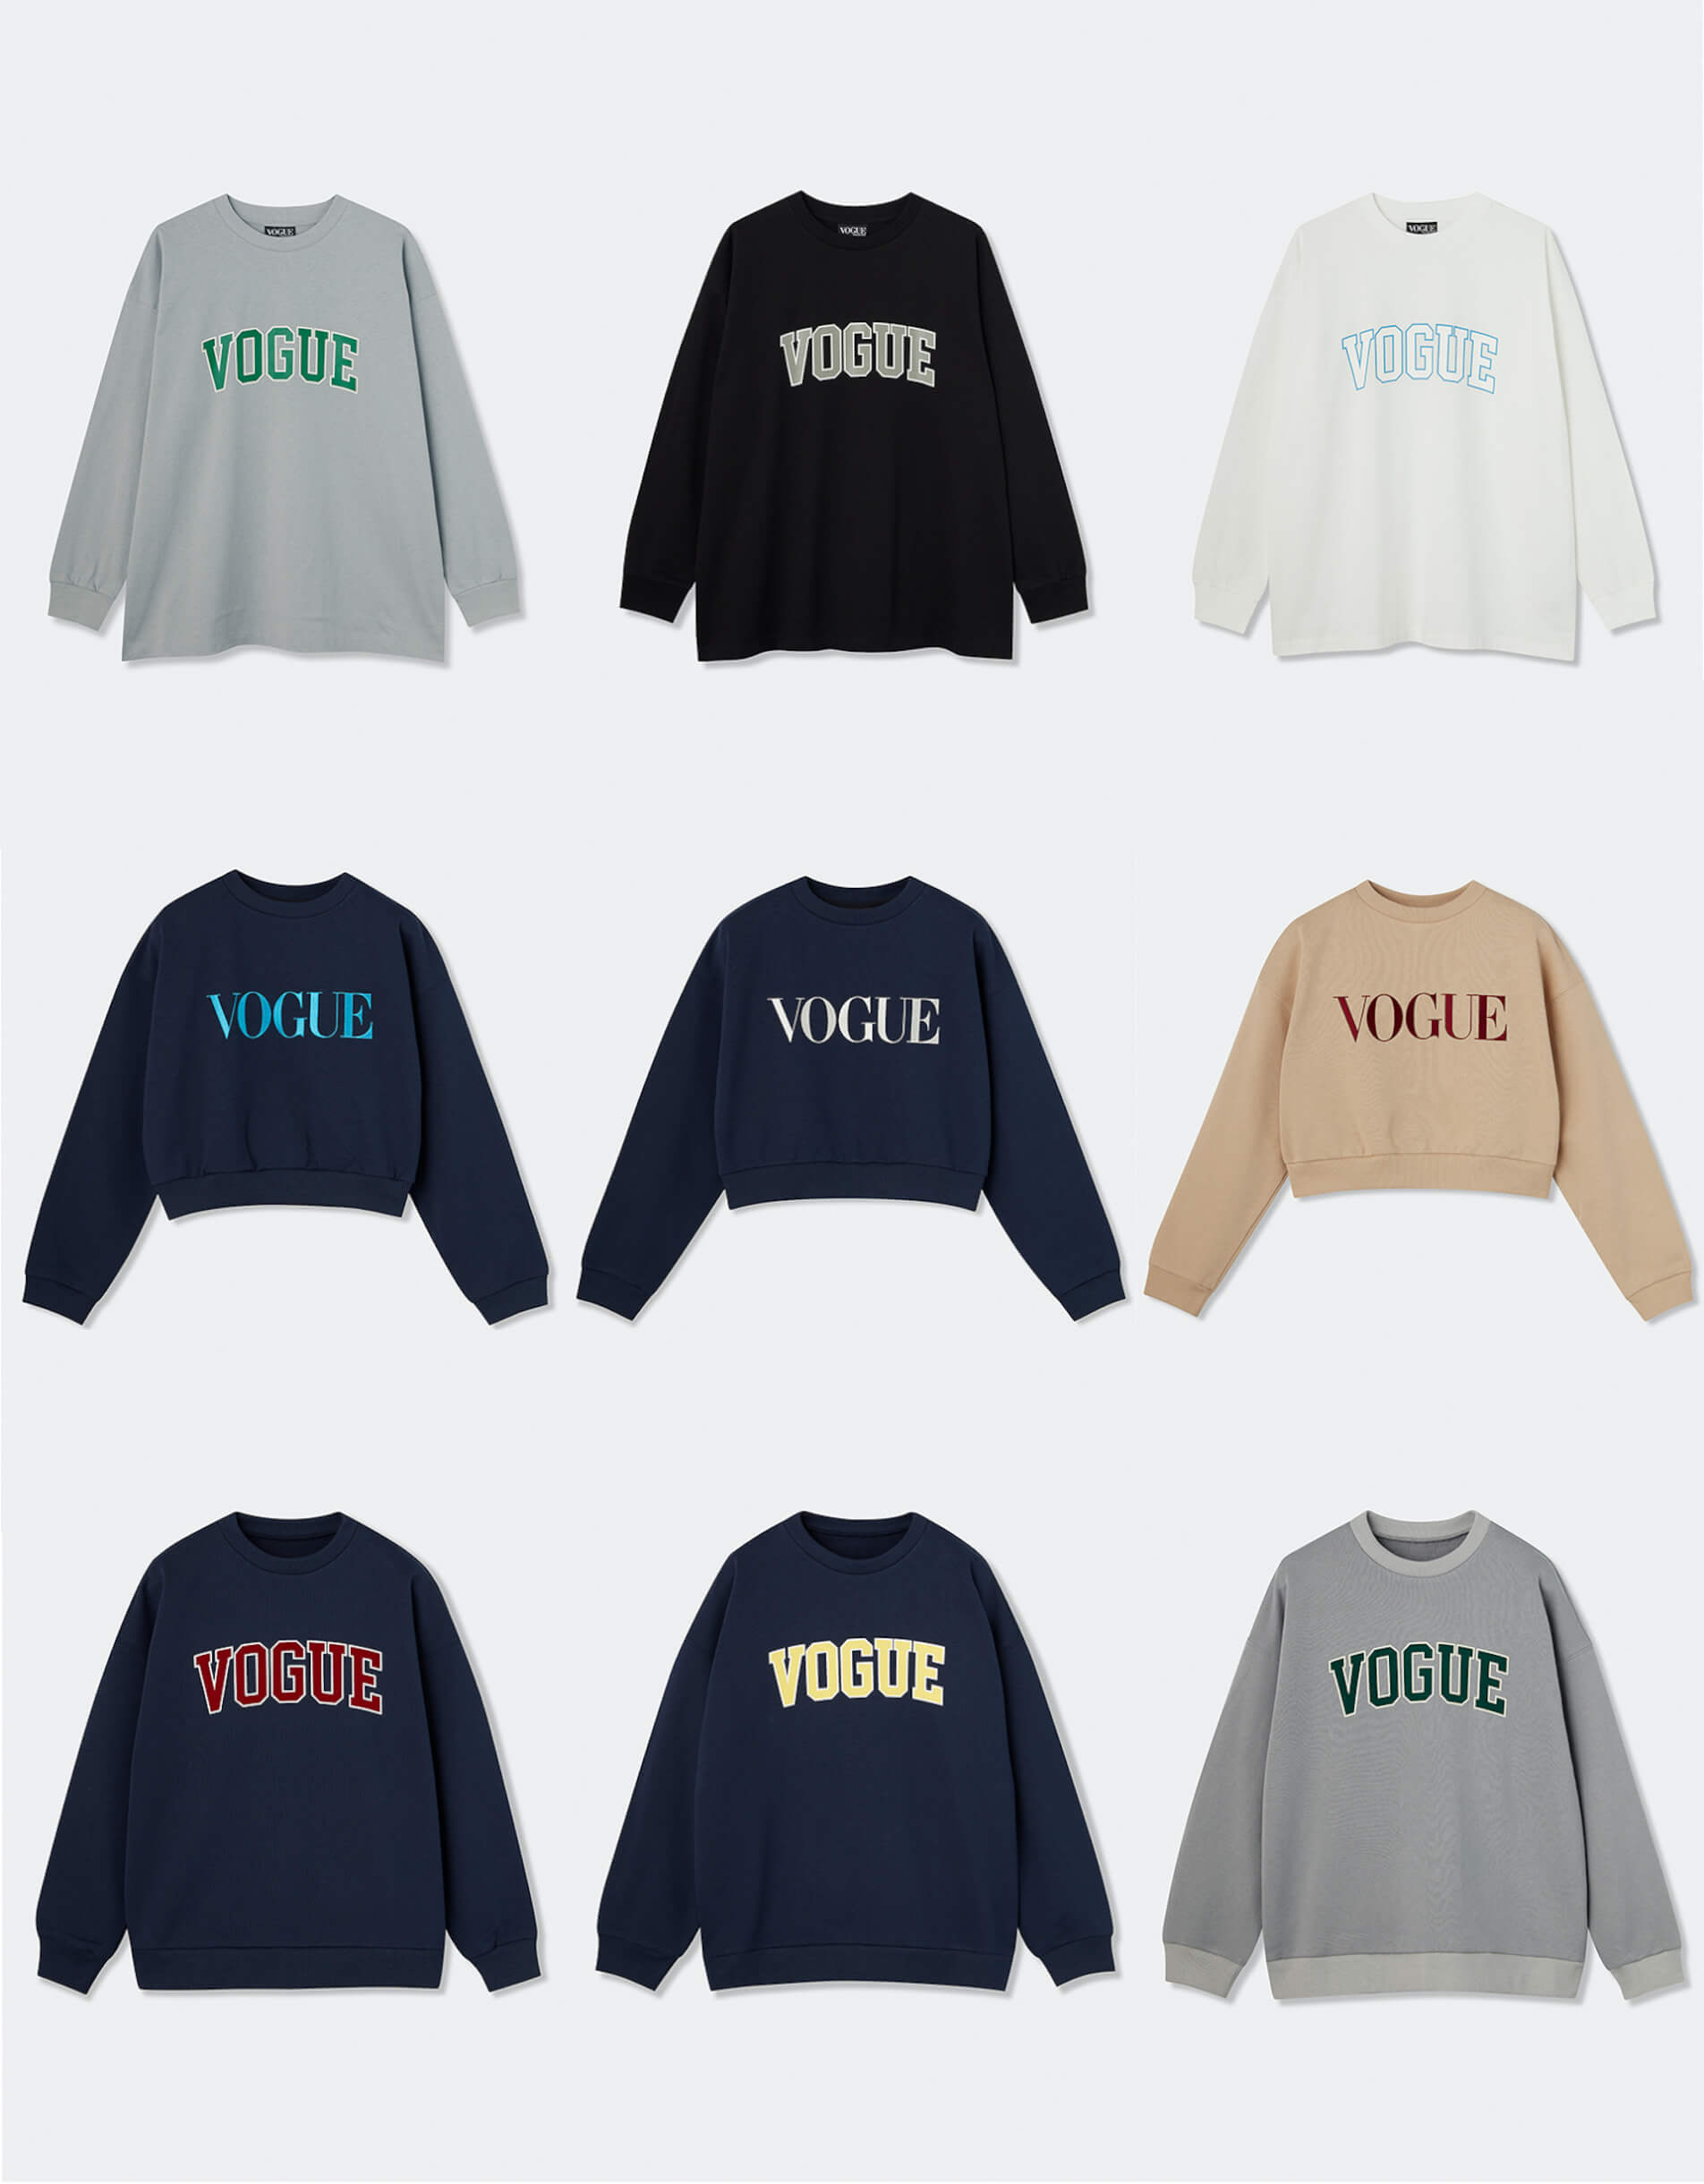 VOGUEの公式アパレル「VOGUE Collection」に秋冬限定RETRO COLLEGEシリーズが登場｜ロングスリーブTシャツなど新作も fashion221125-vogue3